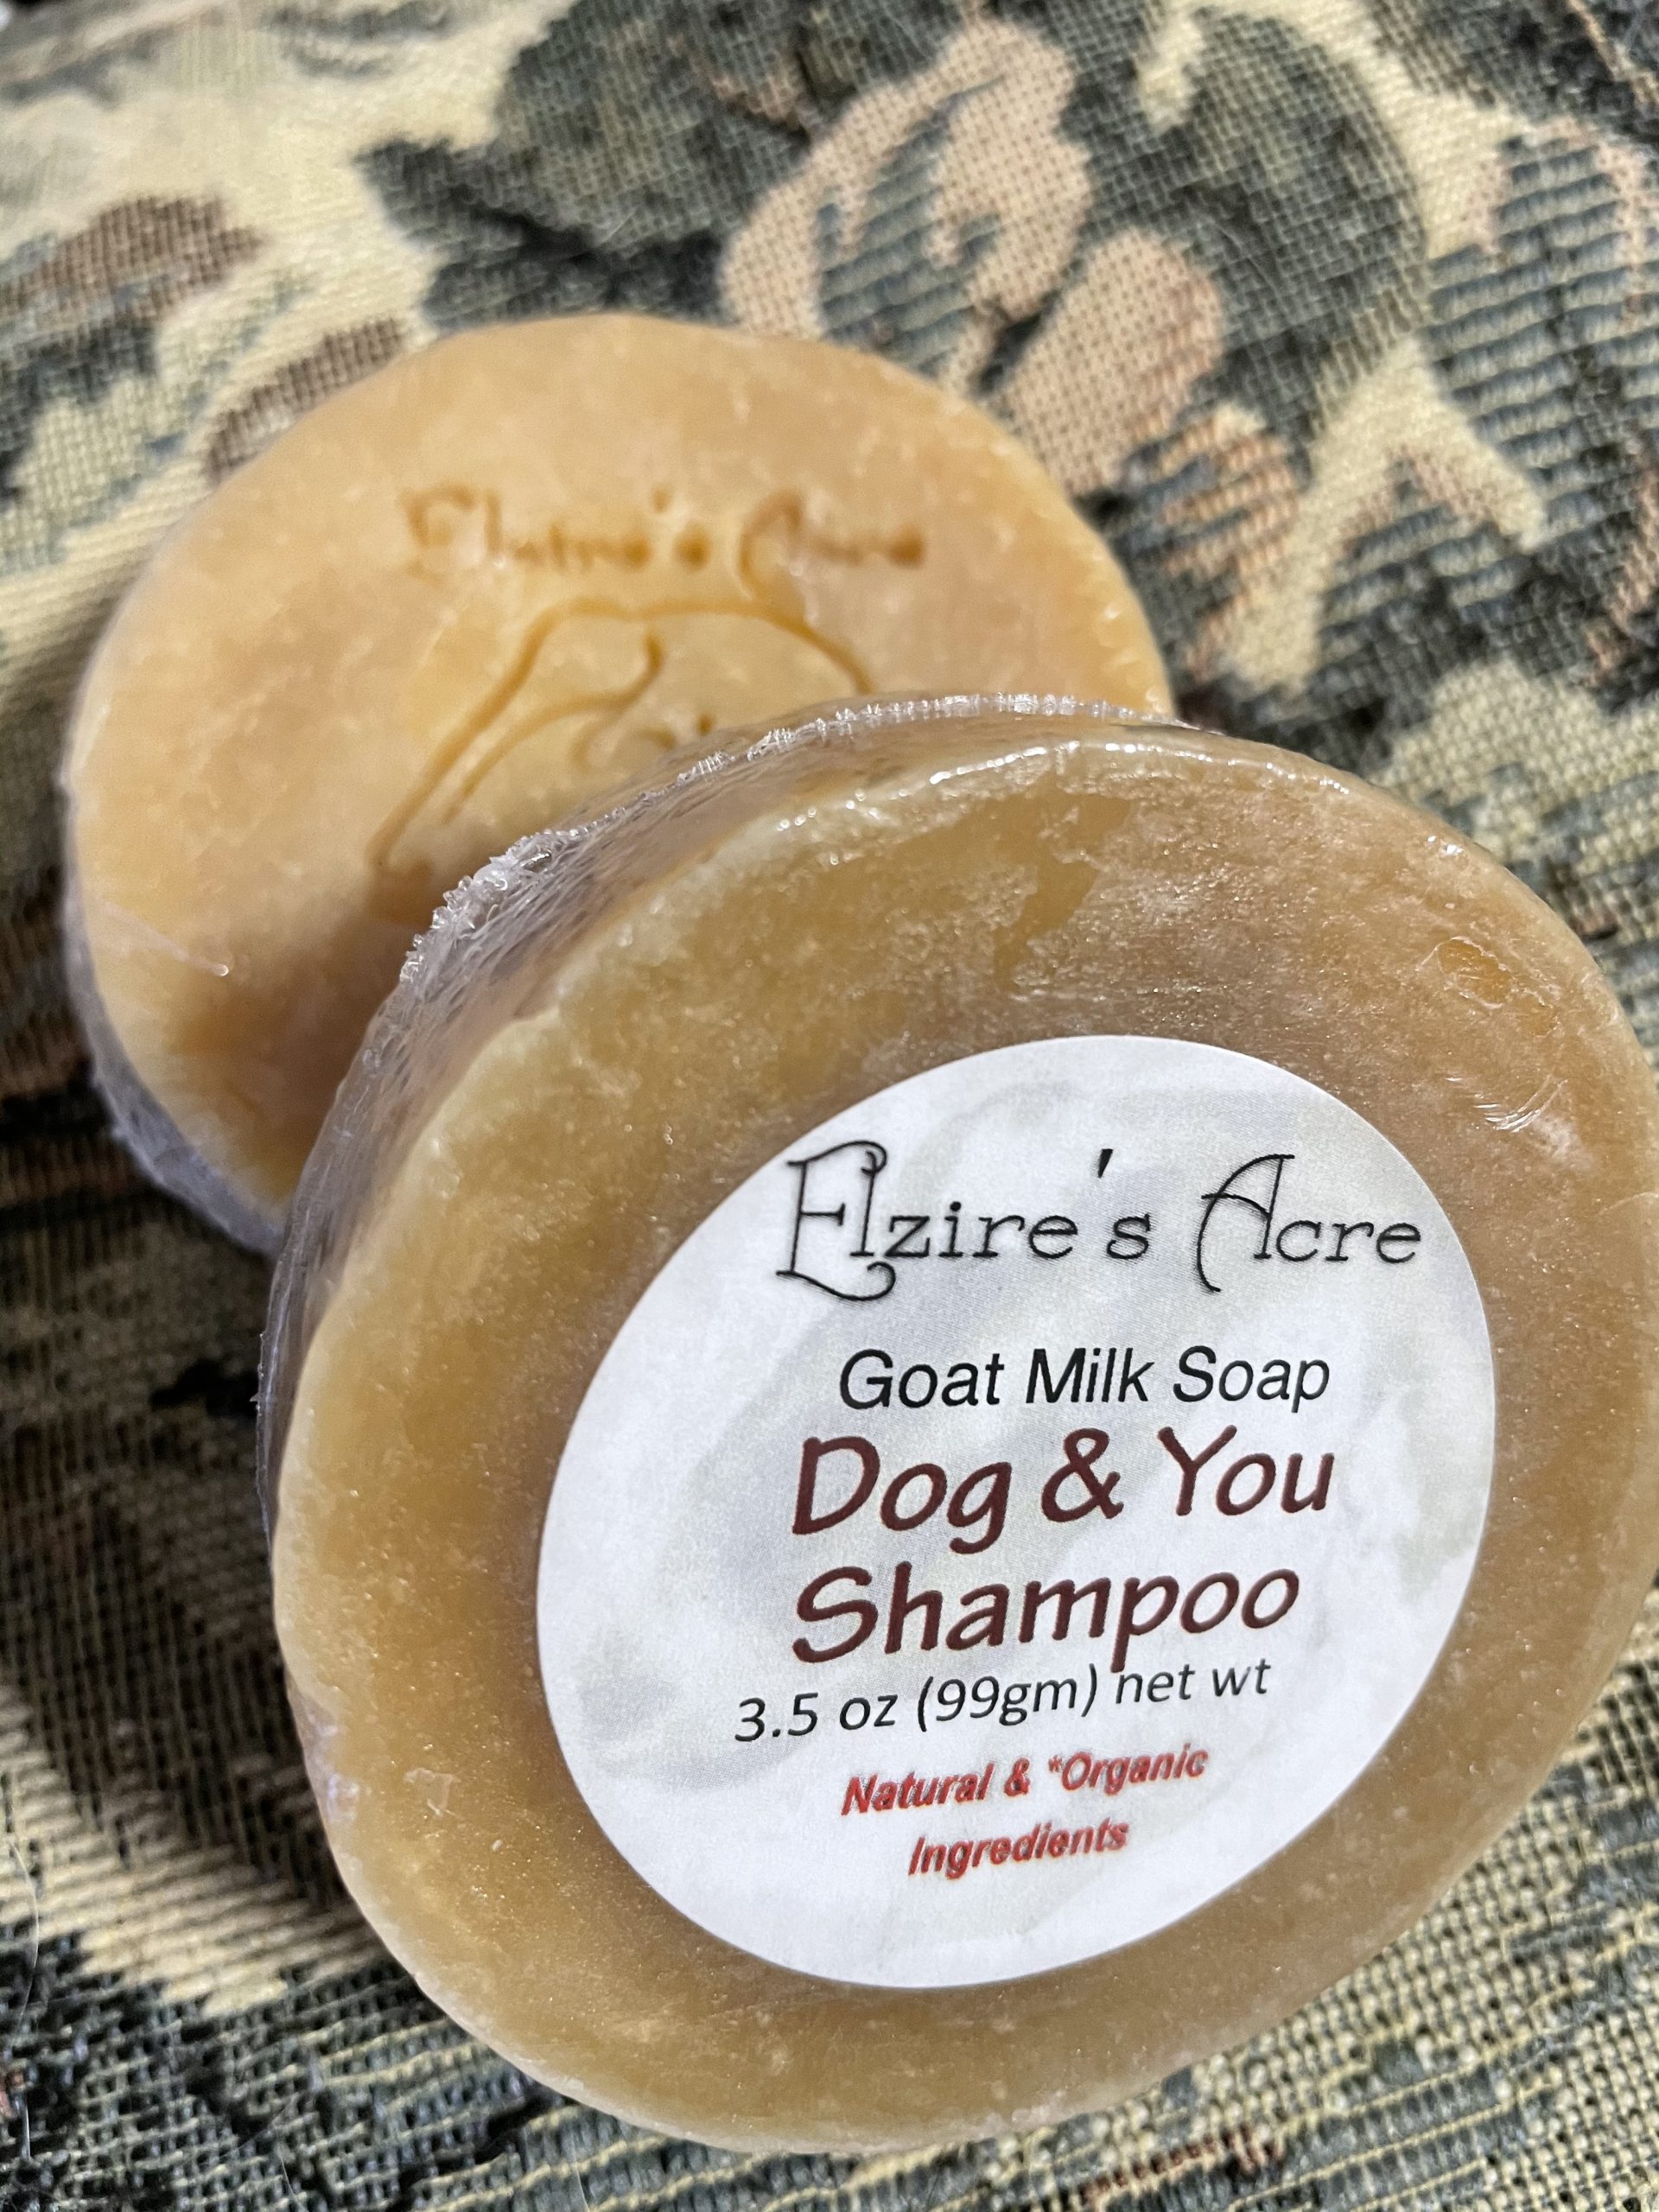 Dog & You Shampoo Goat Milk Soap - Elzire's Acre